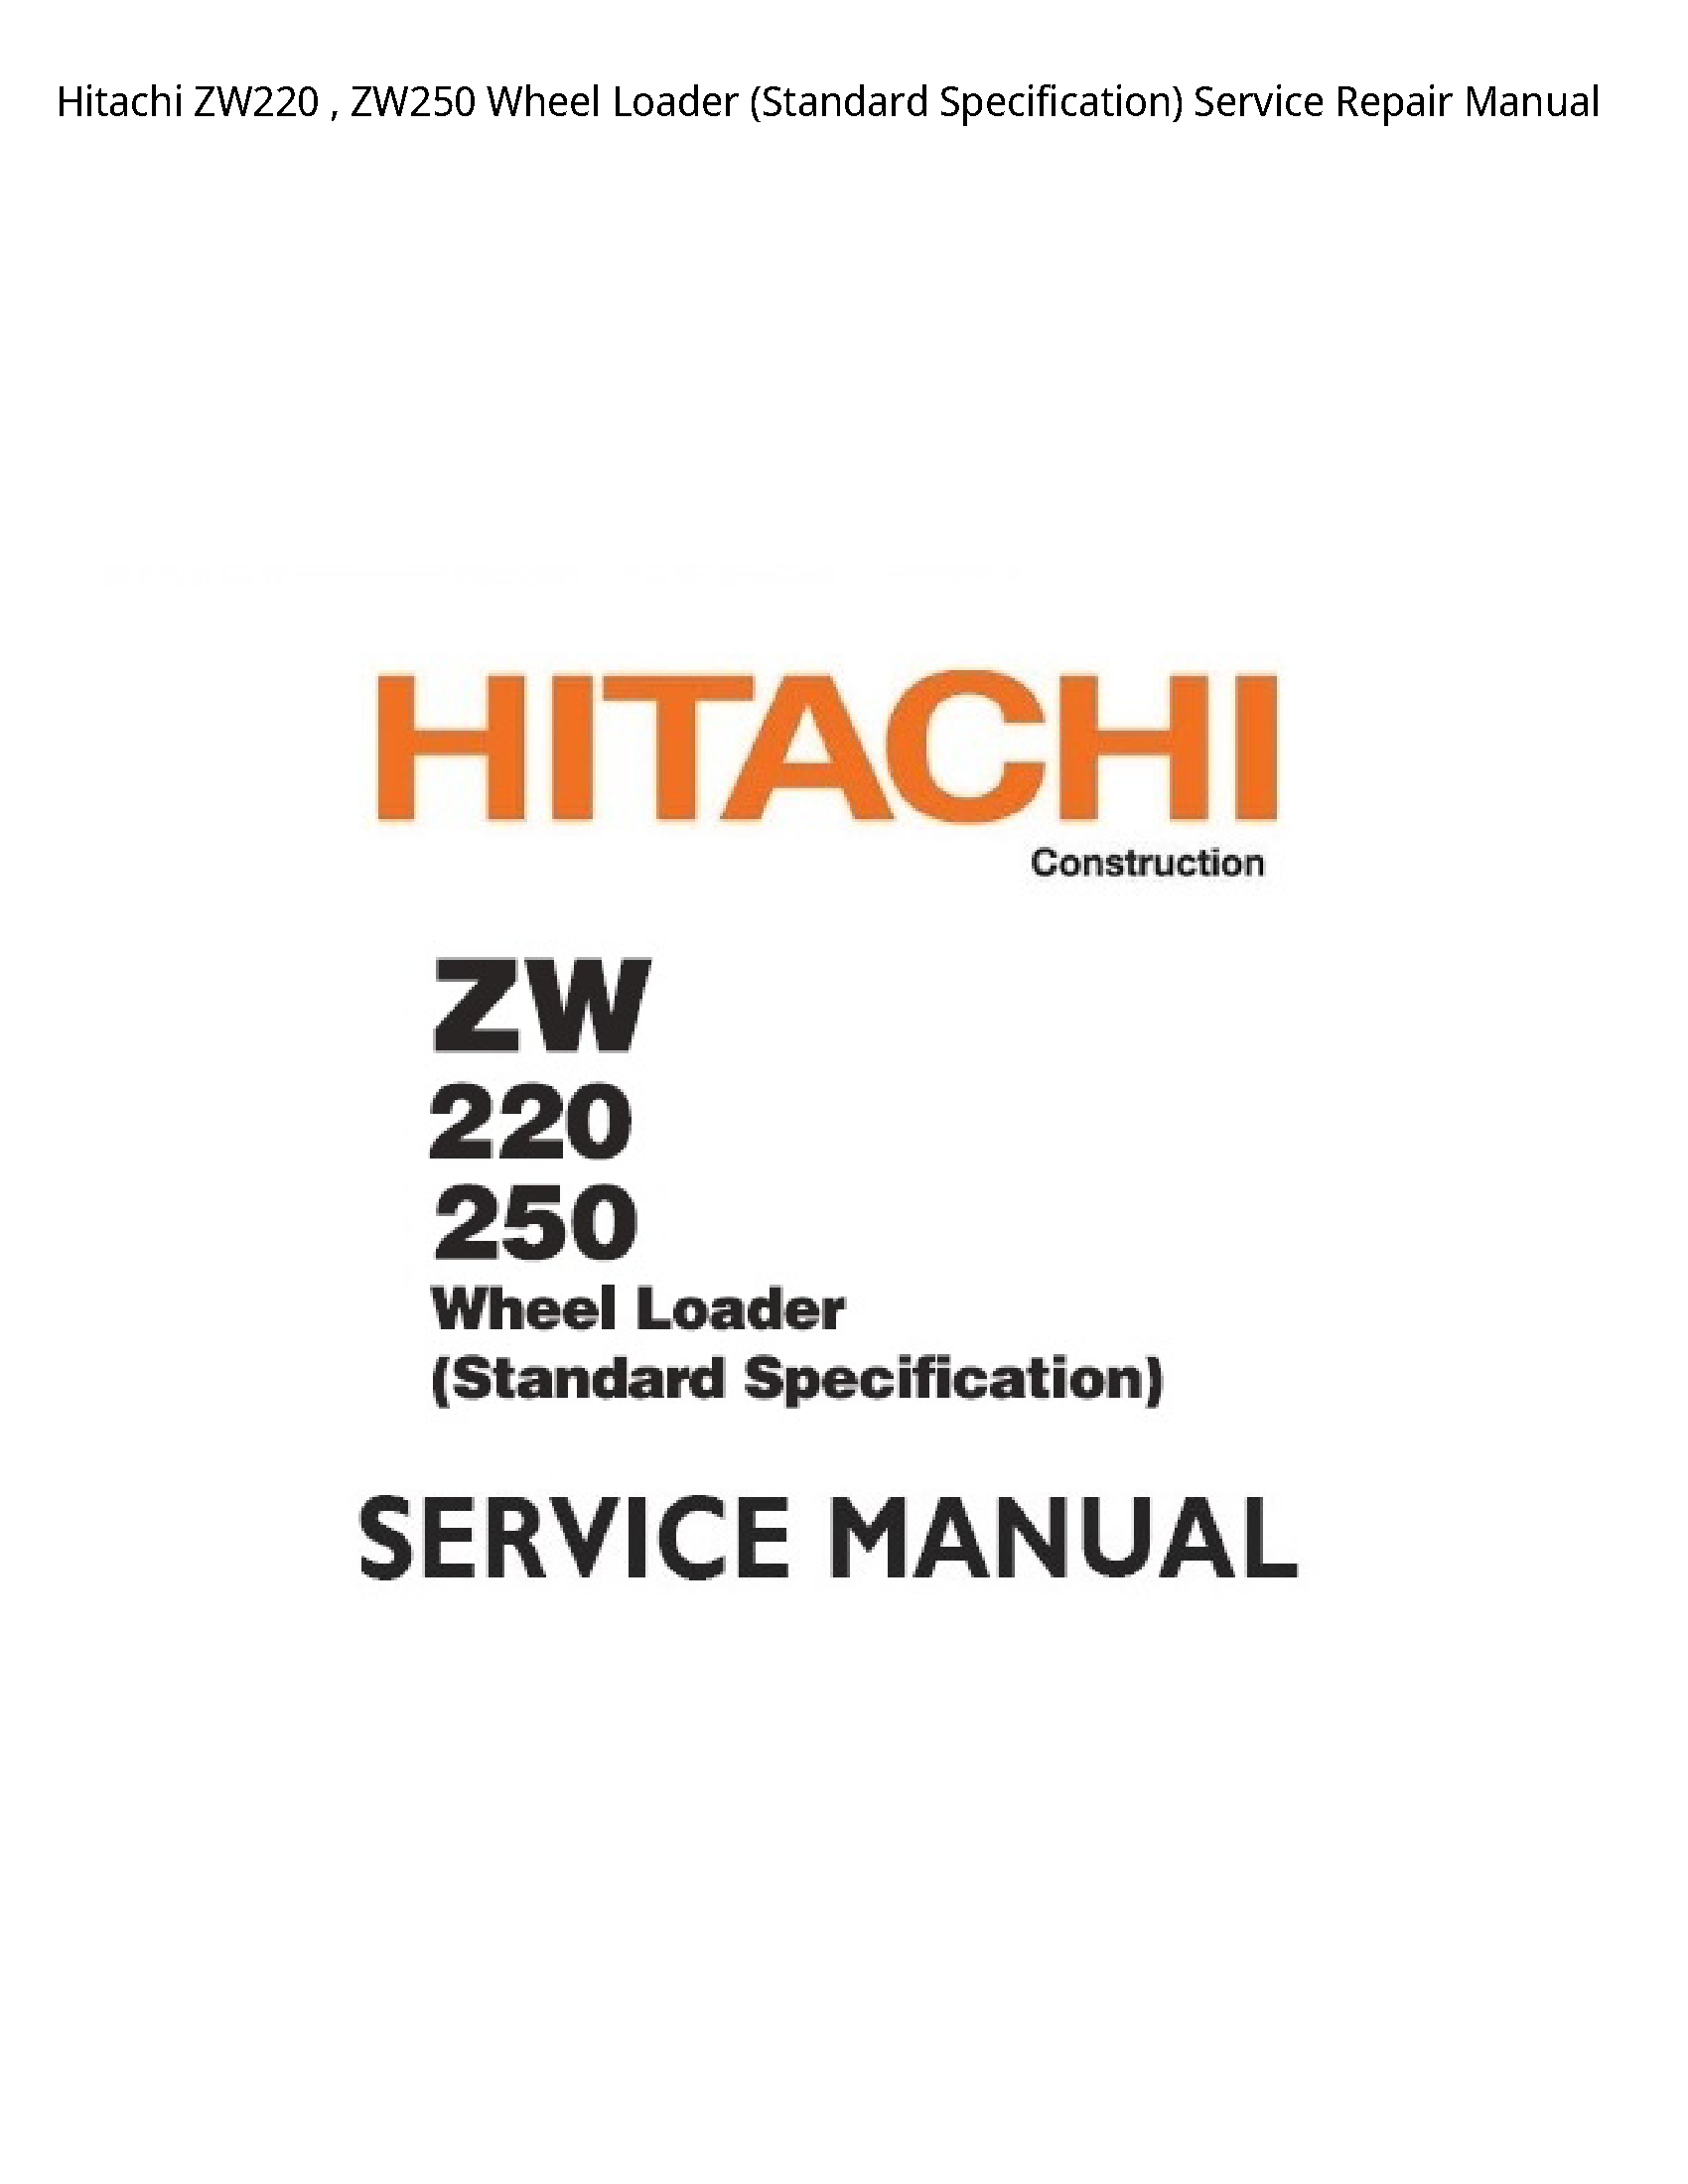 Hitachi ZW220 Wheel Loader (Standard Specification) manual